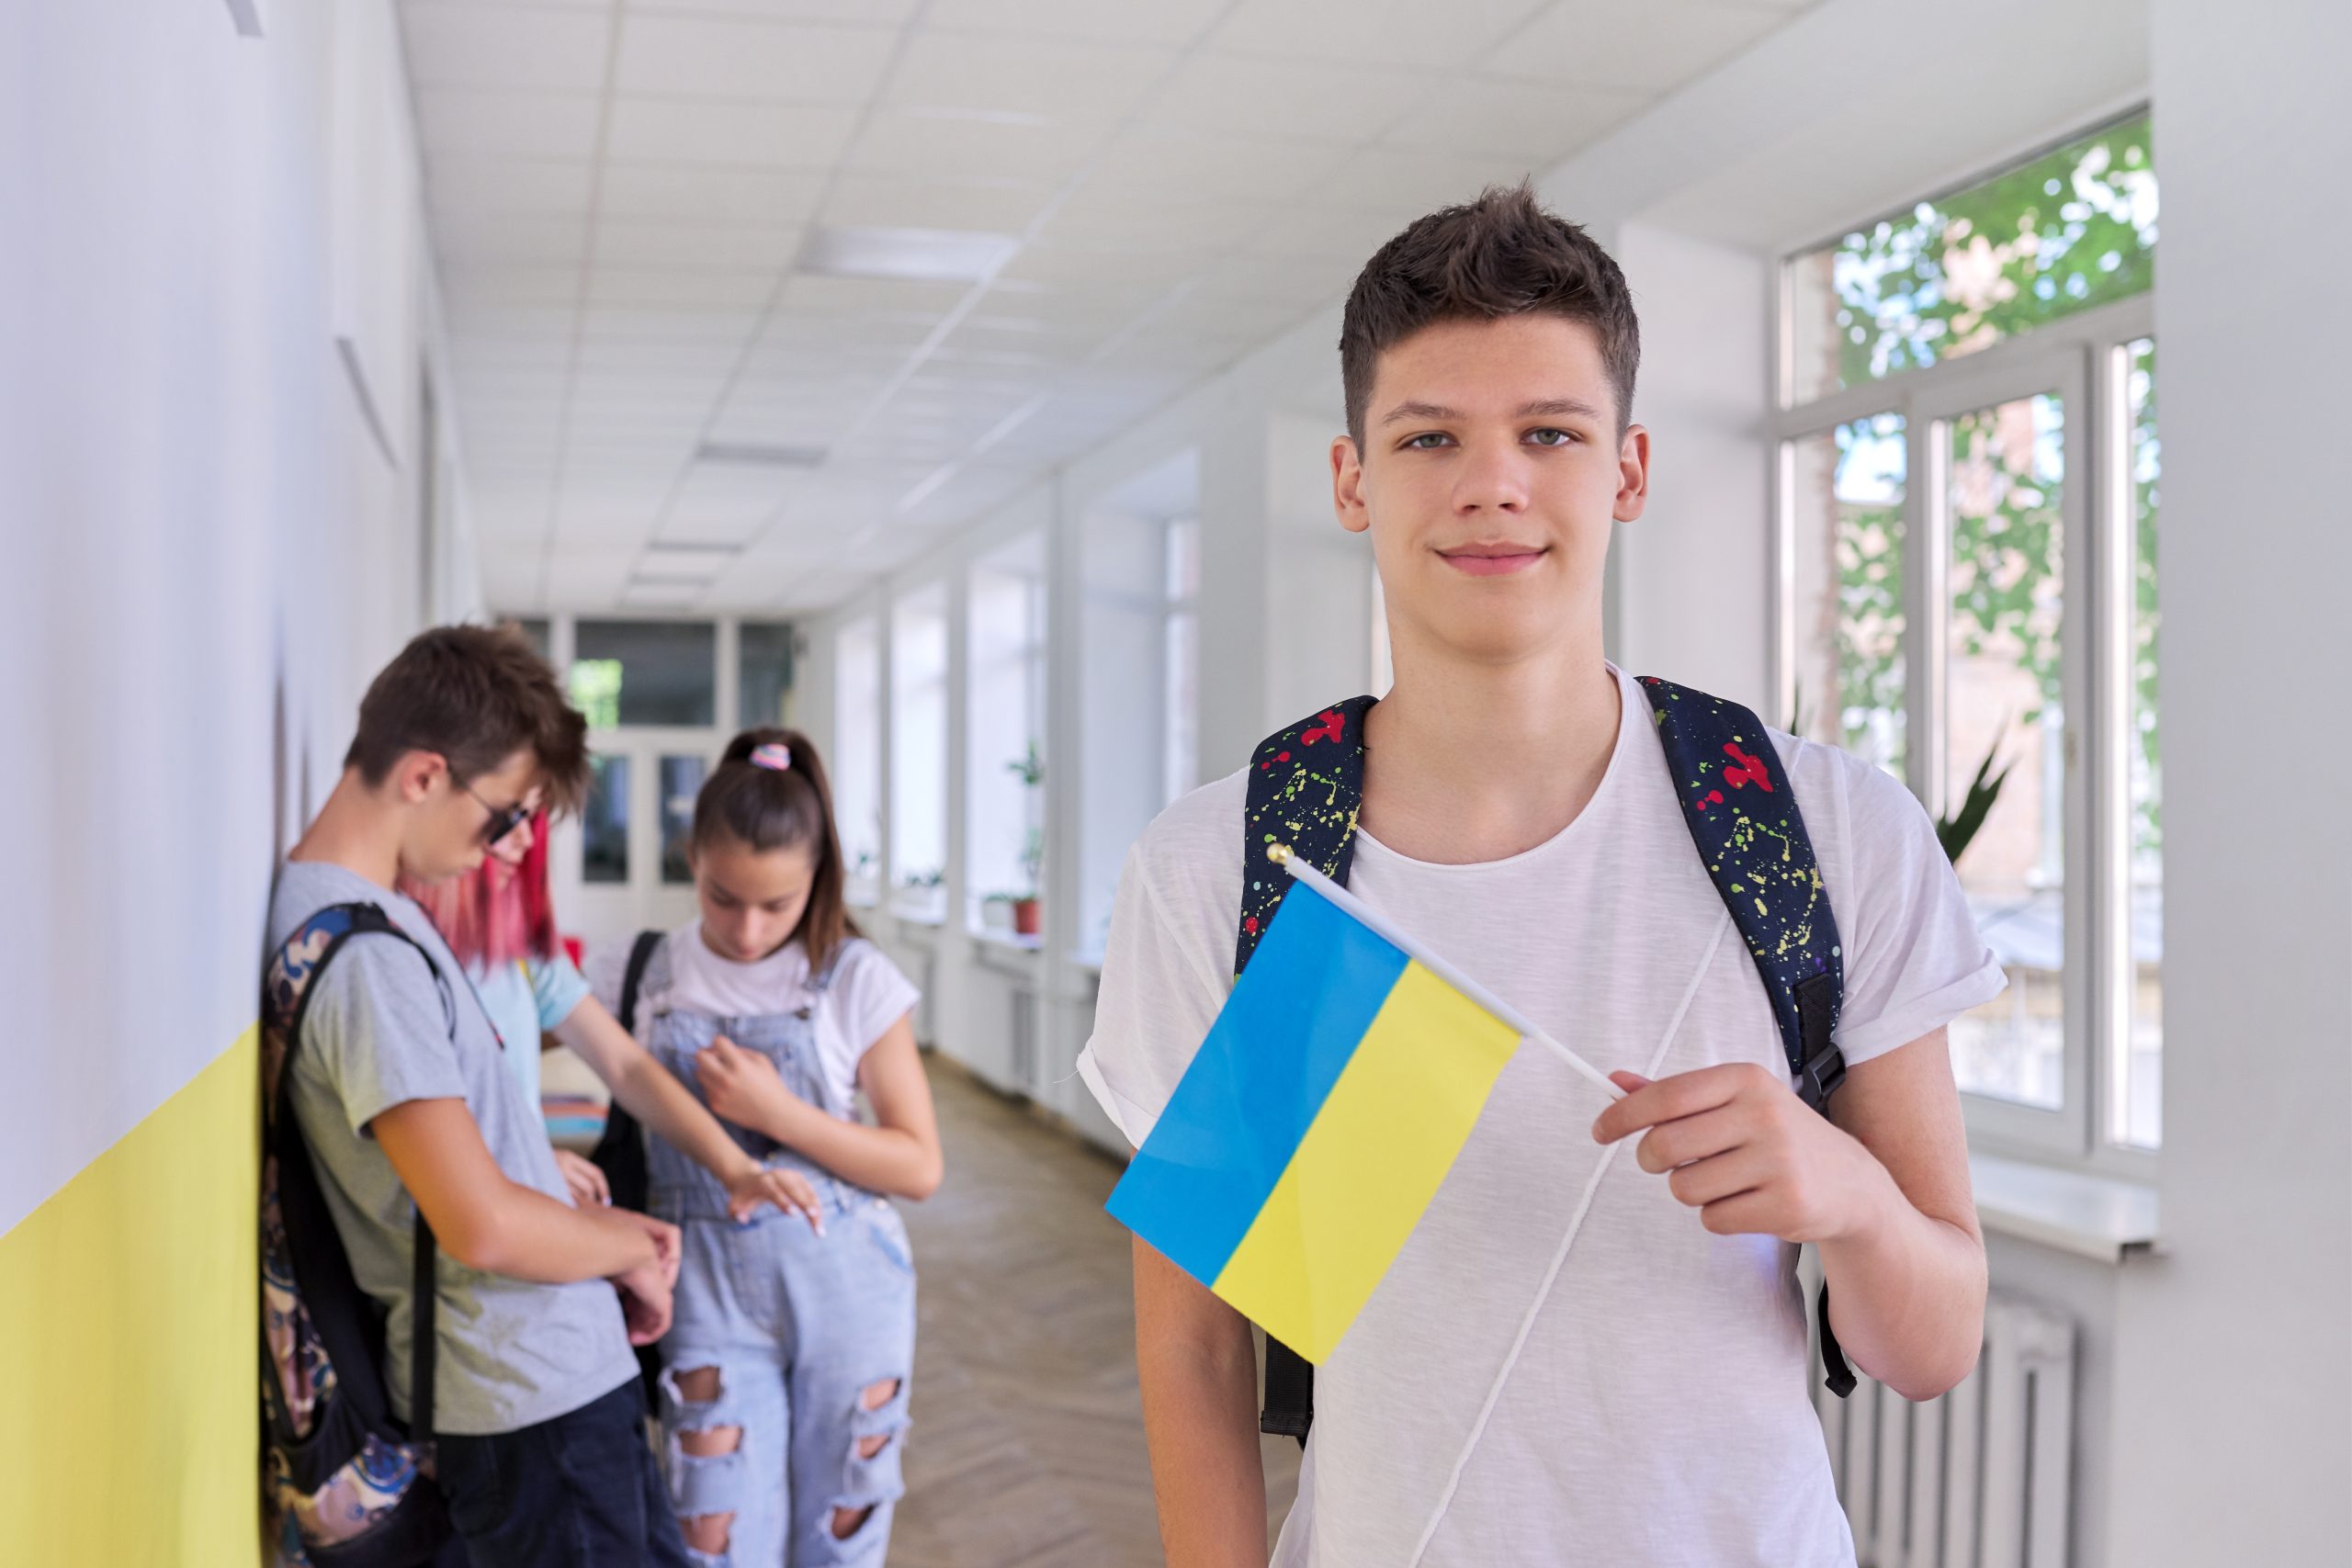 Teenager student with Ukraine flag, school corridor group of students background. Ukraine school education youth people concept